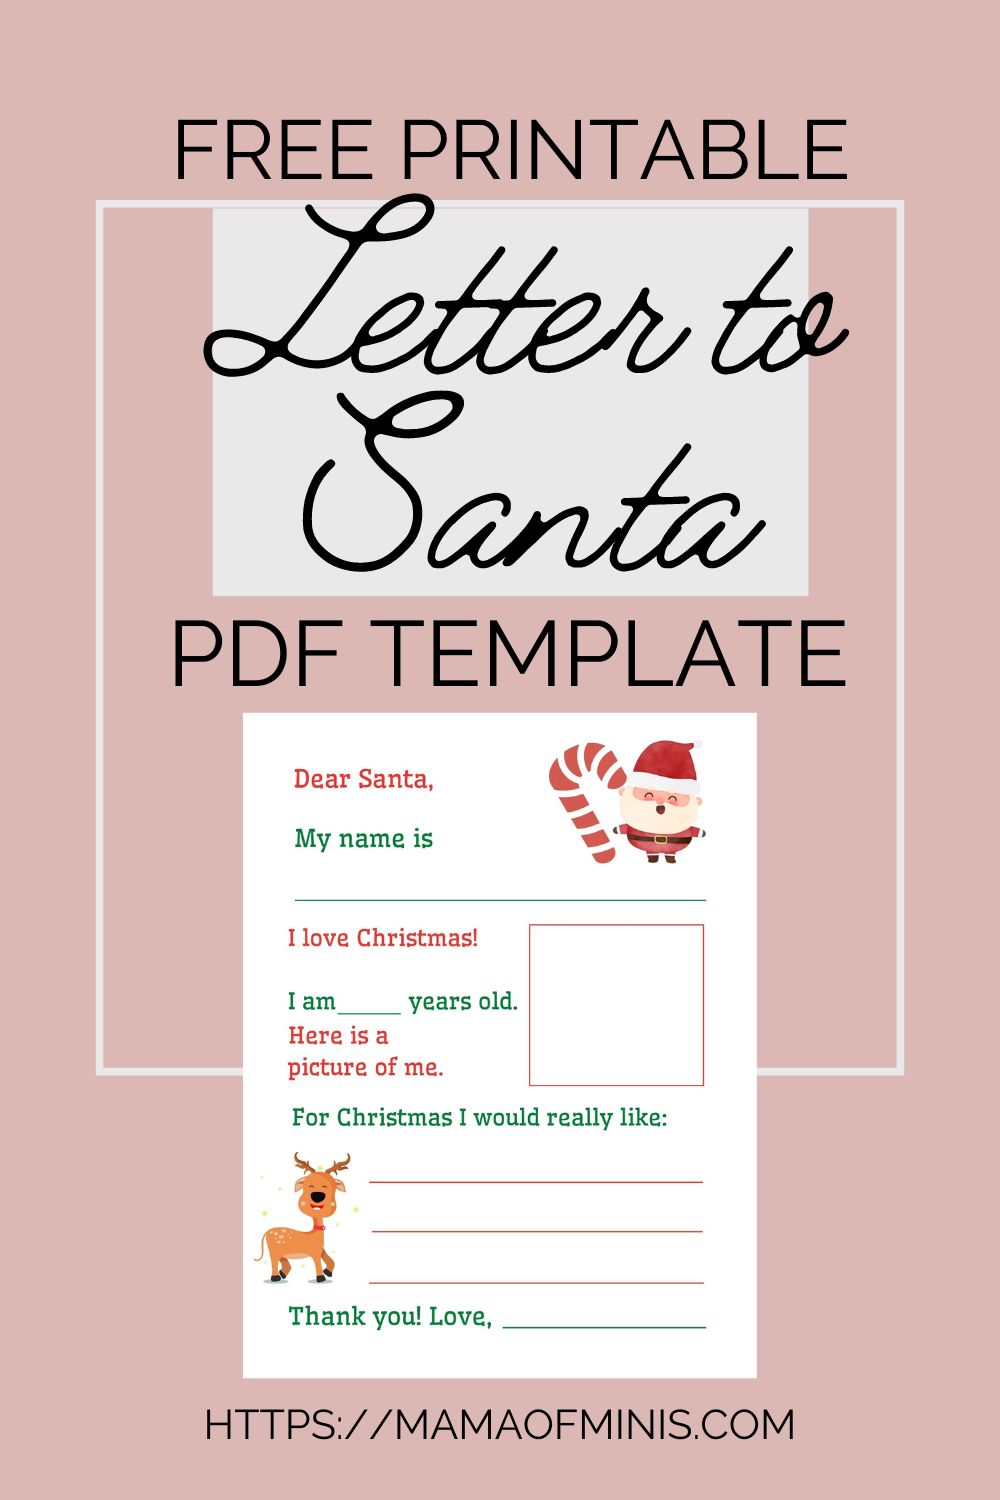 Free Printable Letter to Santa PDF Template